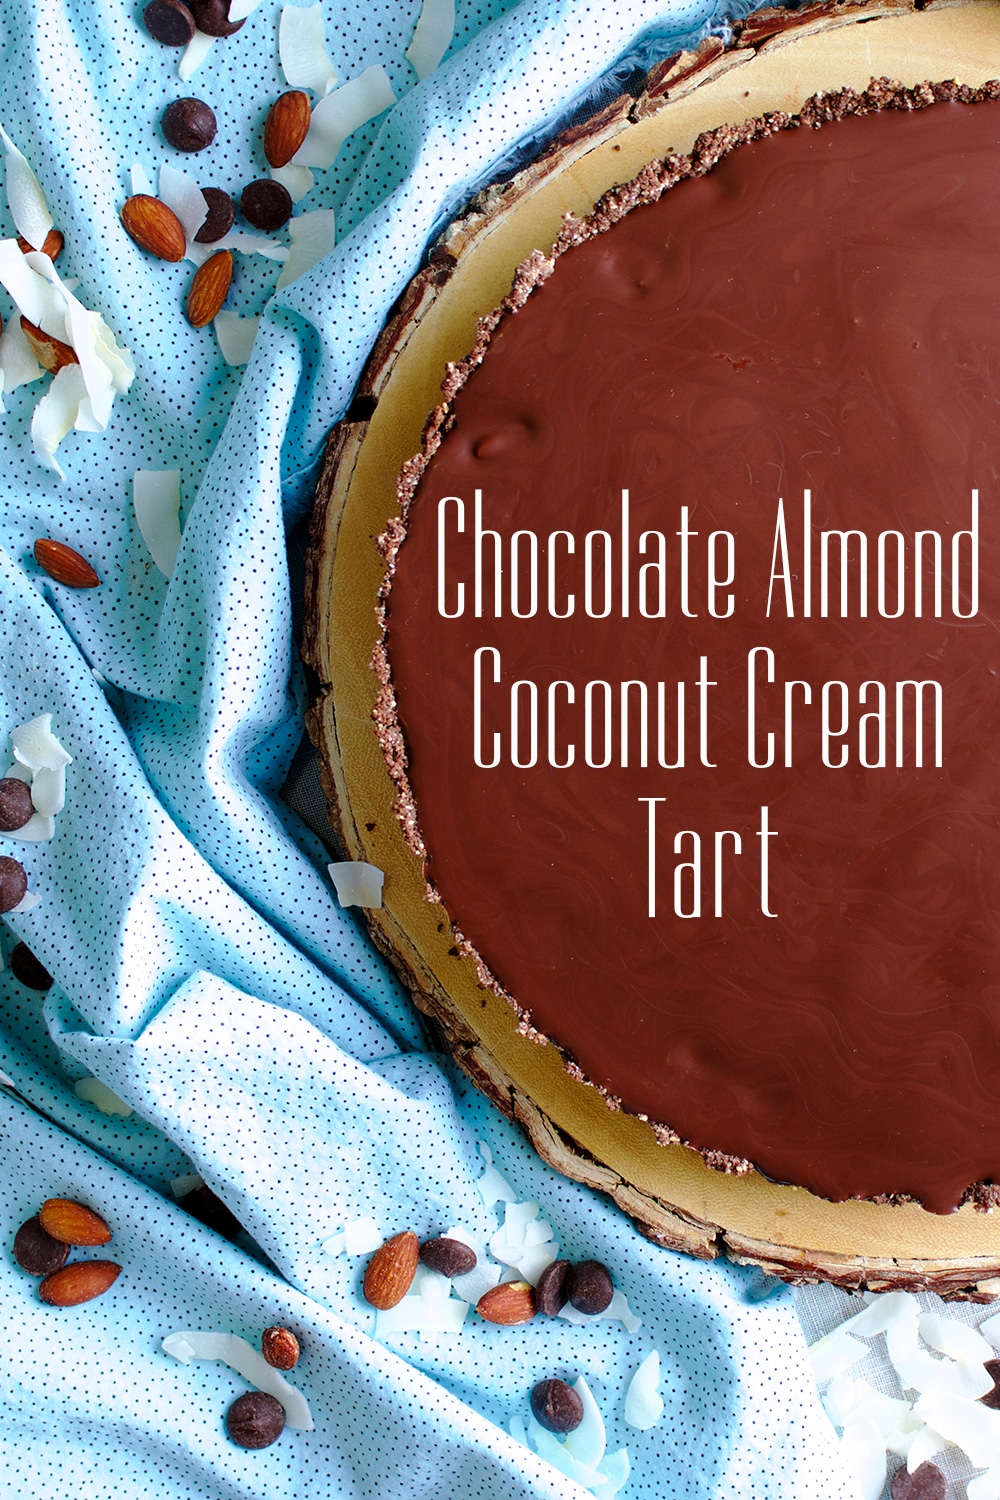 Chocolate Almond Coconut Cream Tart